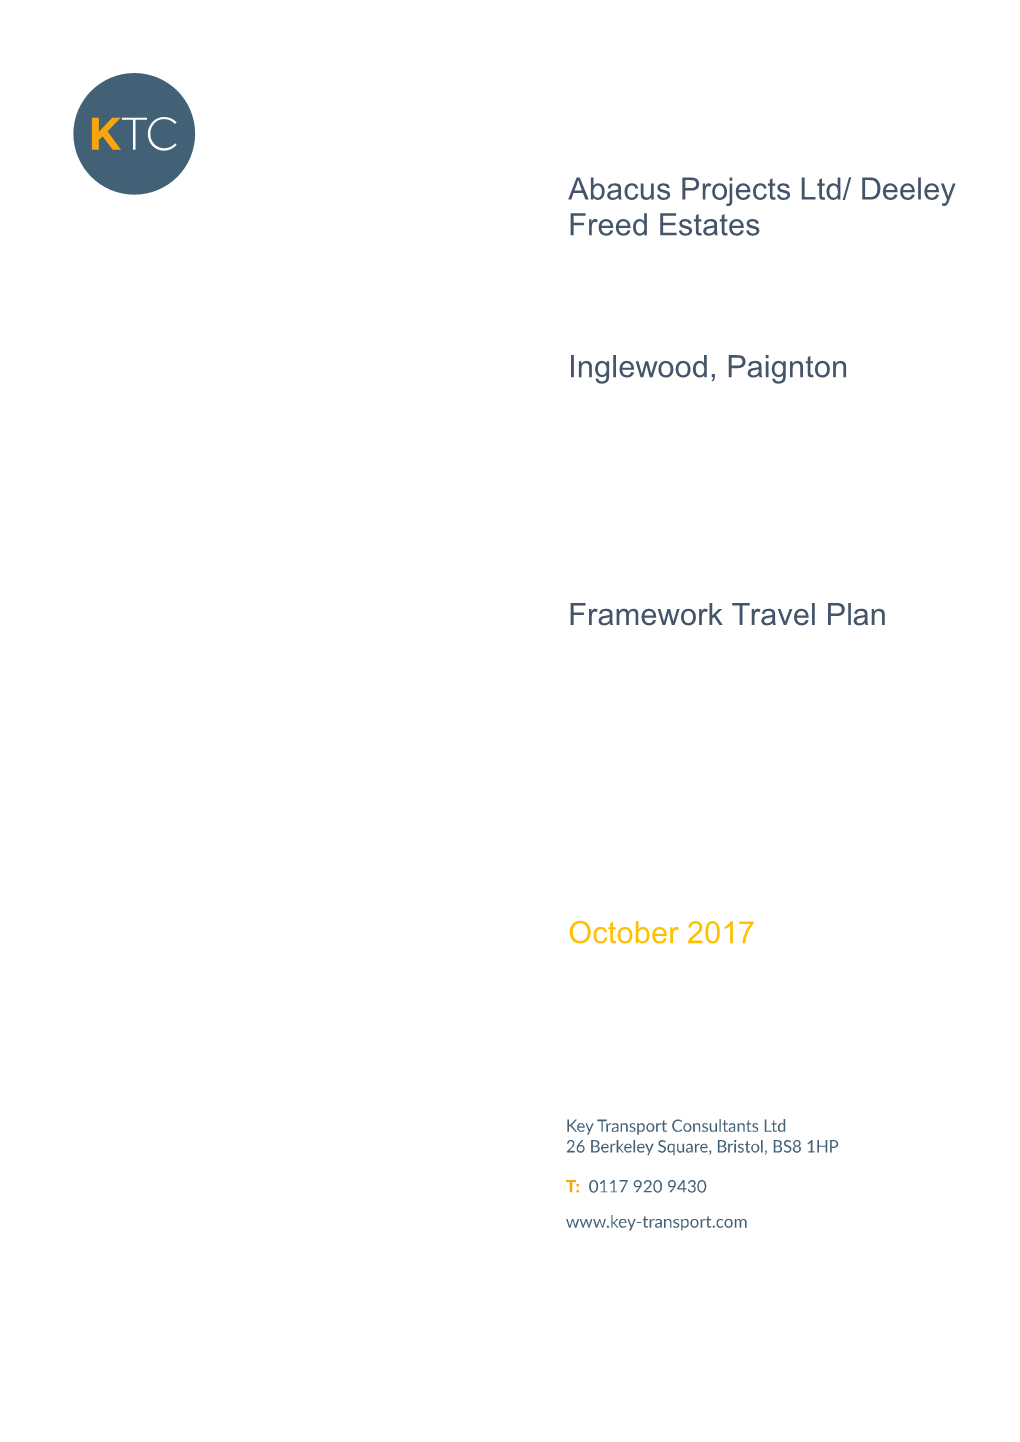 Framework Travel Plan